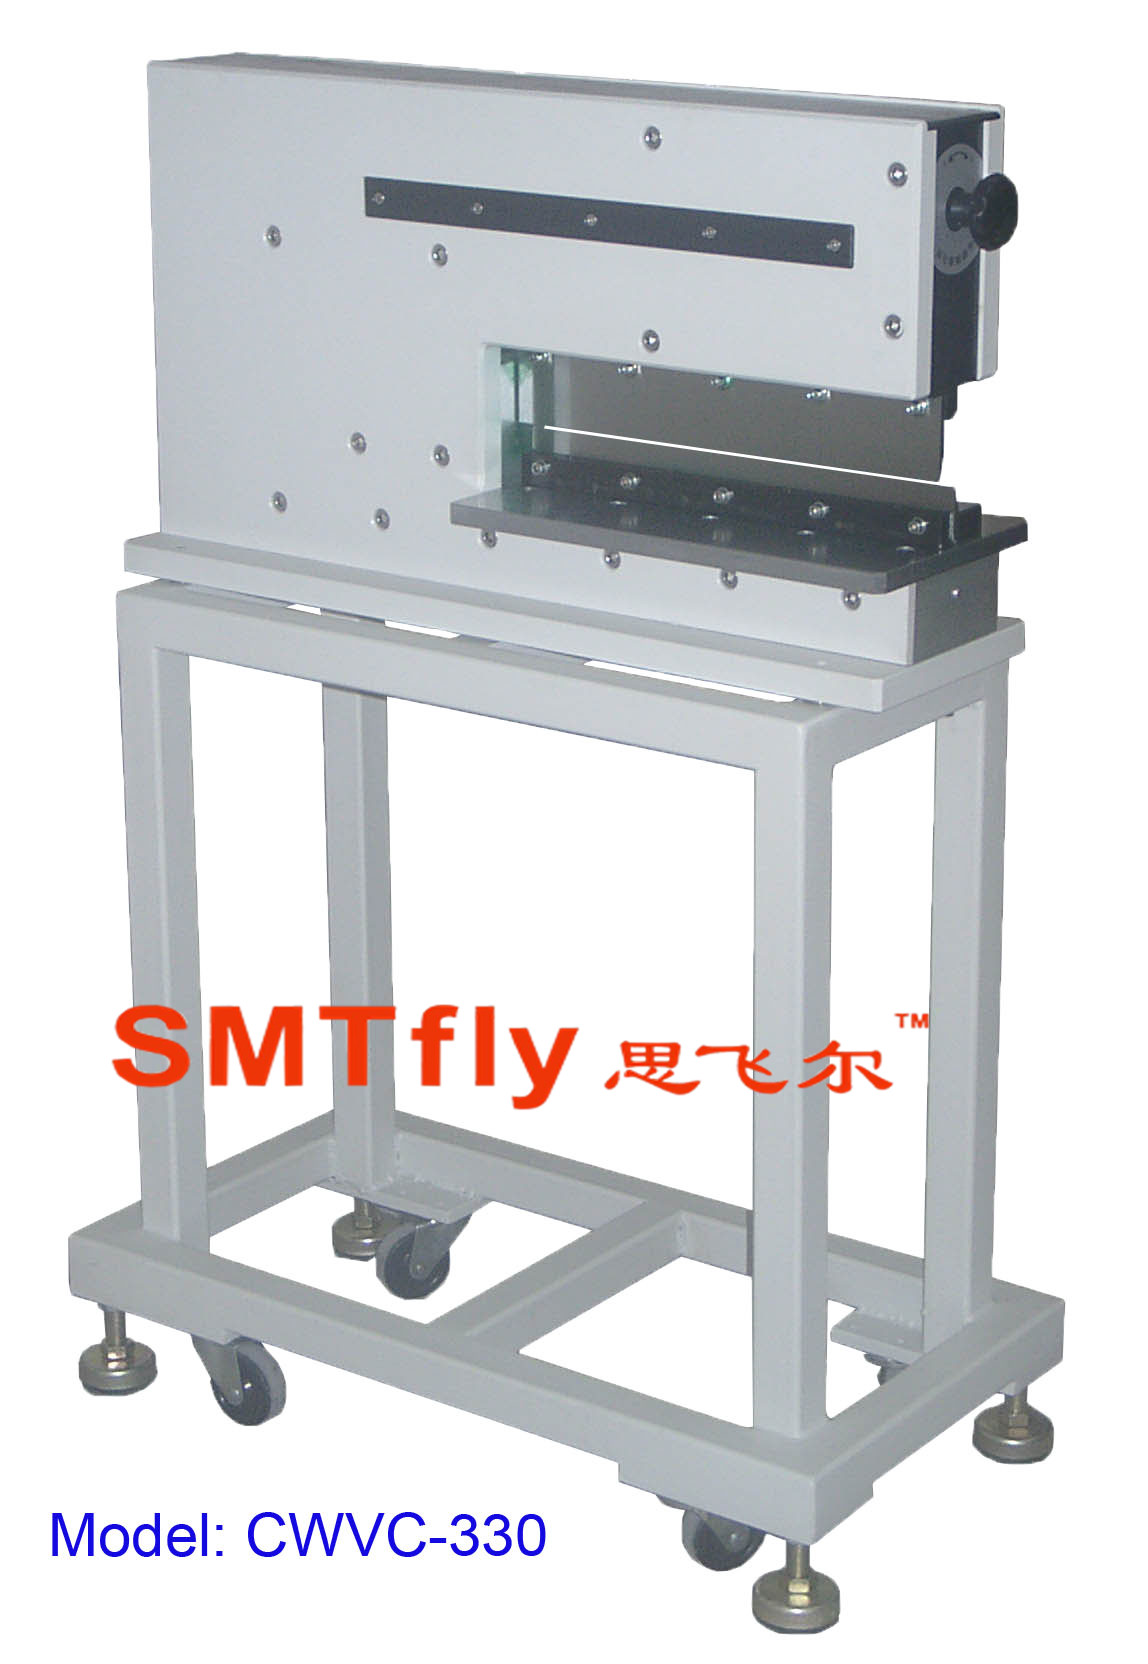 Computer PCB Cutter,SMTfly-330J